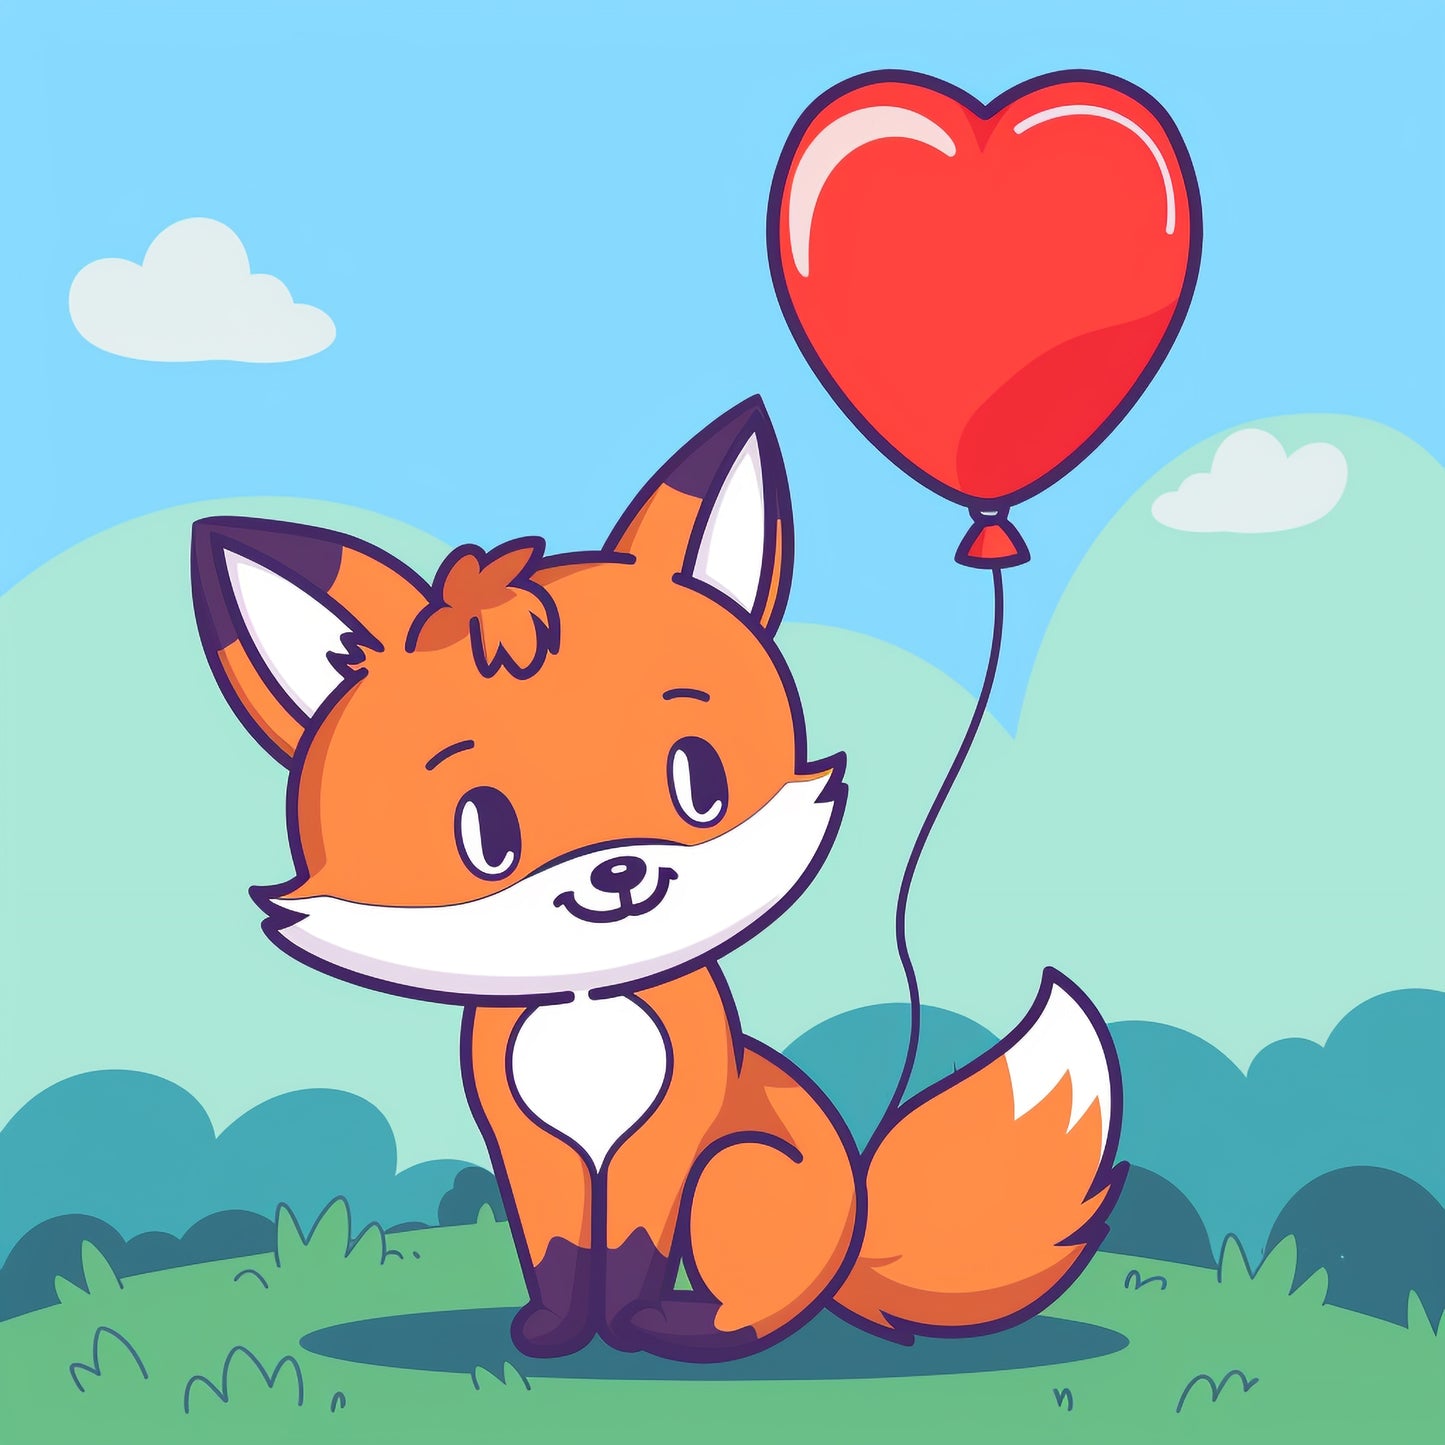 Charming Cartoon Fox with Red Heart Balloon Illustration